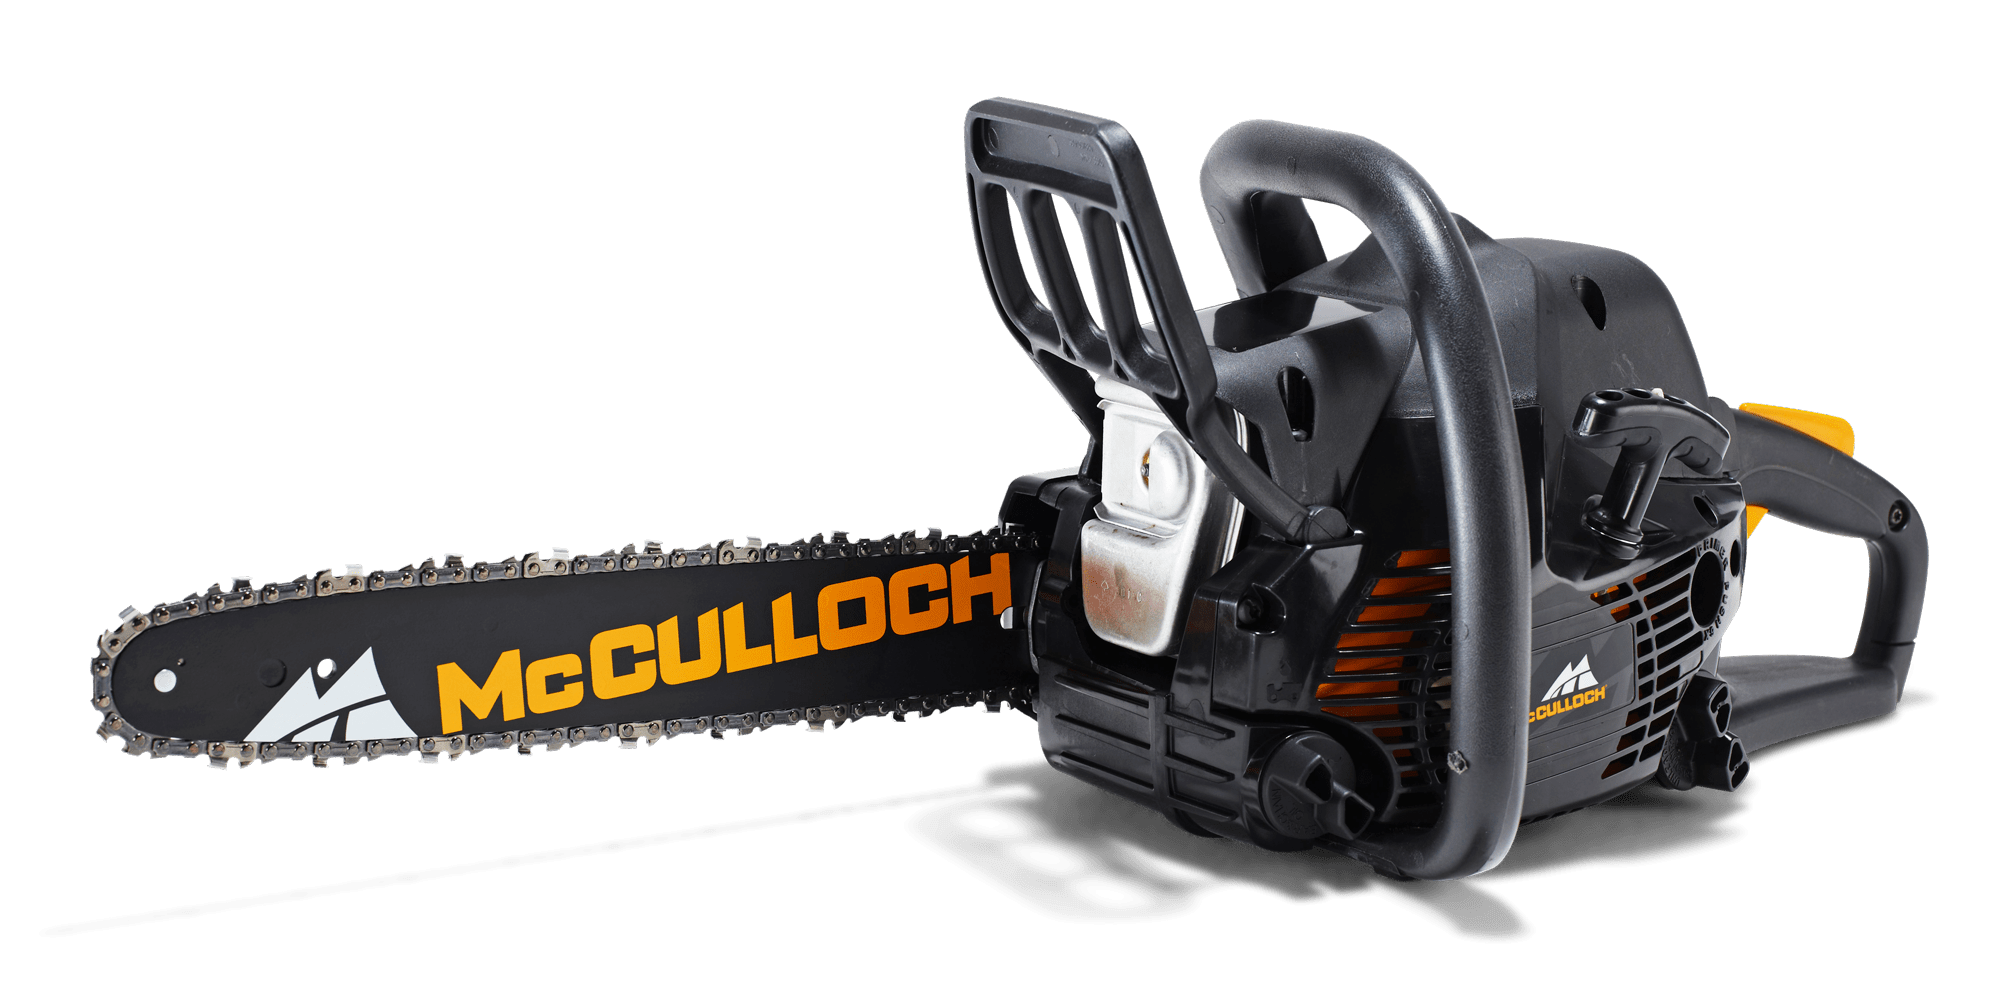 1 x Guide Bar & Chain to fit McCulloch CS340t,CS360t,CS400t 16" Chainsaw 